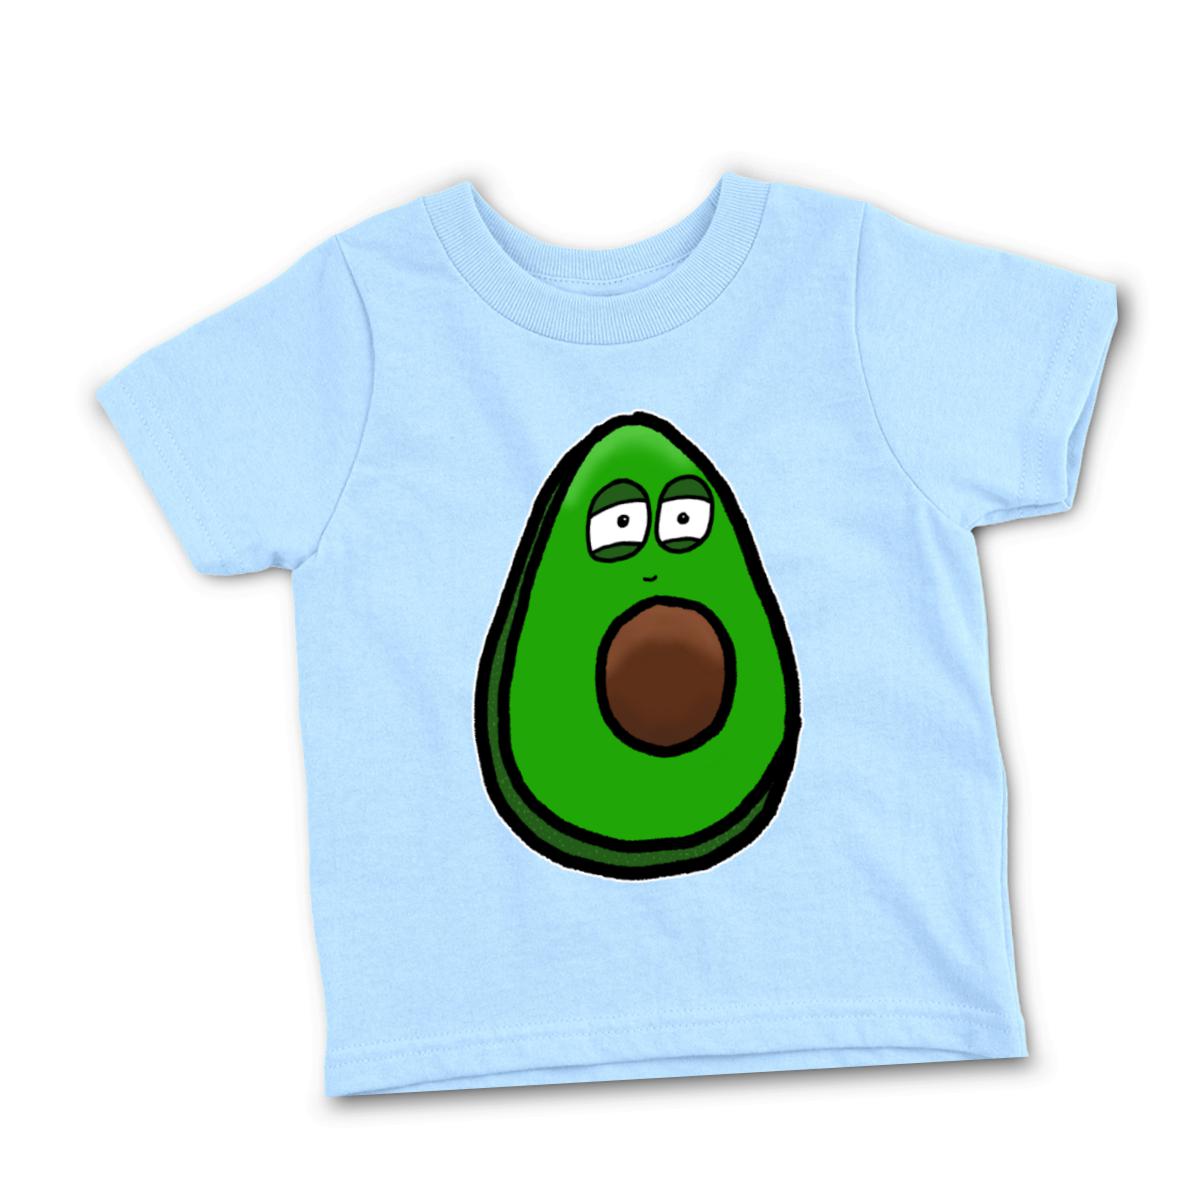 Avocado Toddler Tee 2T light-blue